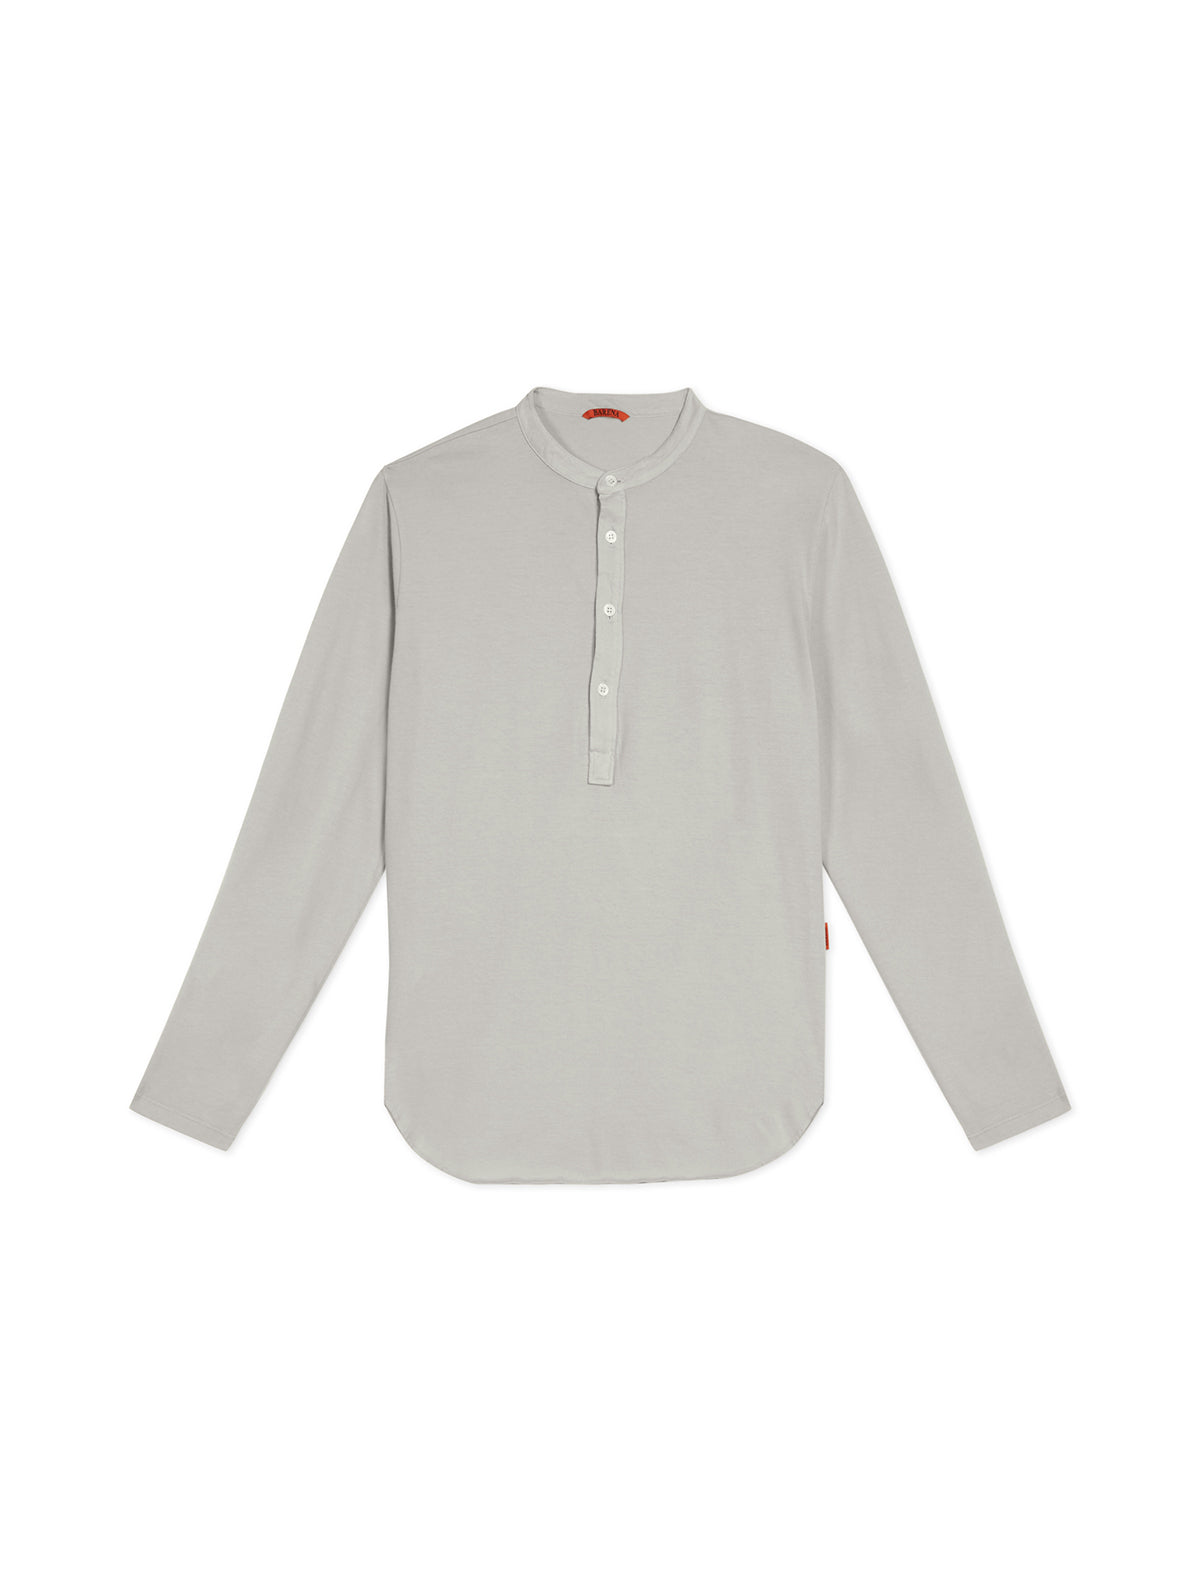 BARENA VENEZIA Cotton Henley Long-Sleeve Shirt in Pearl Grey